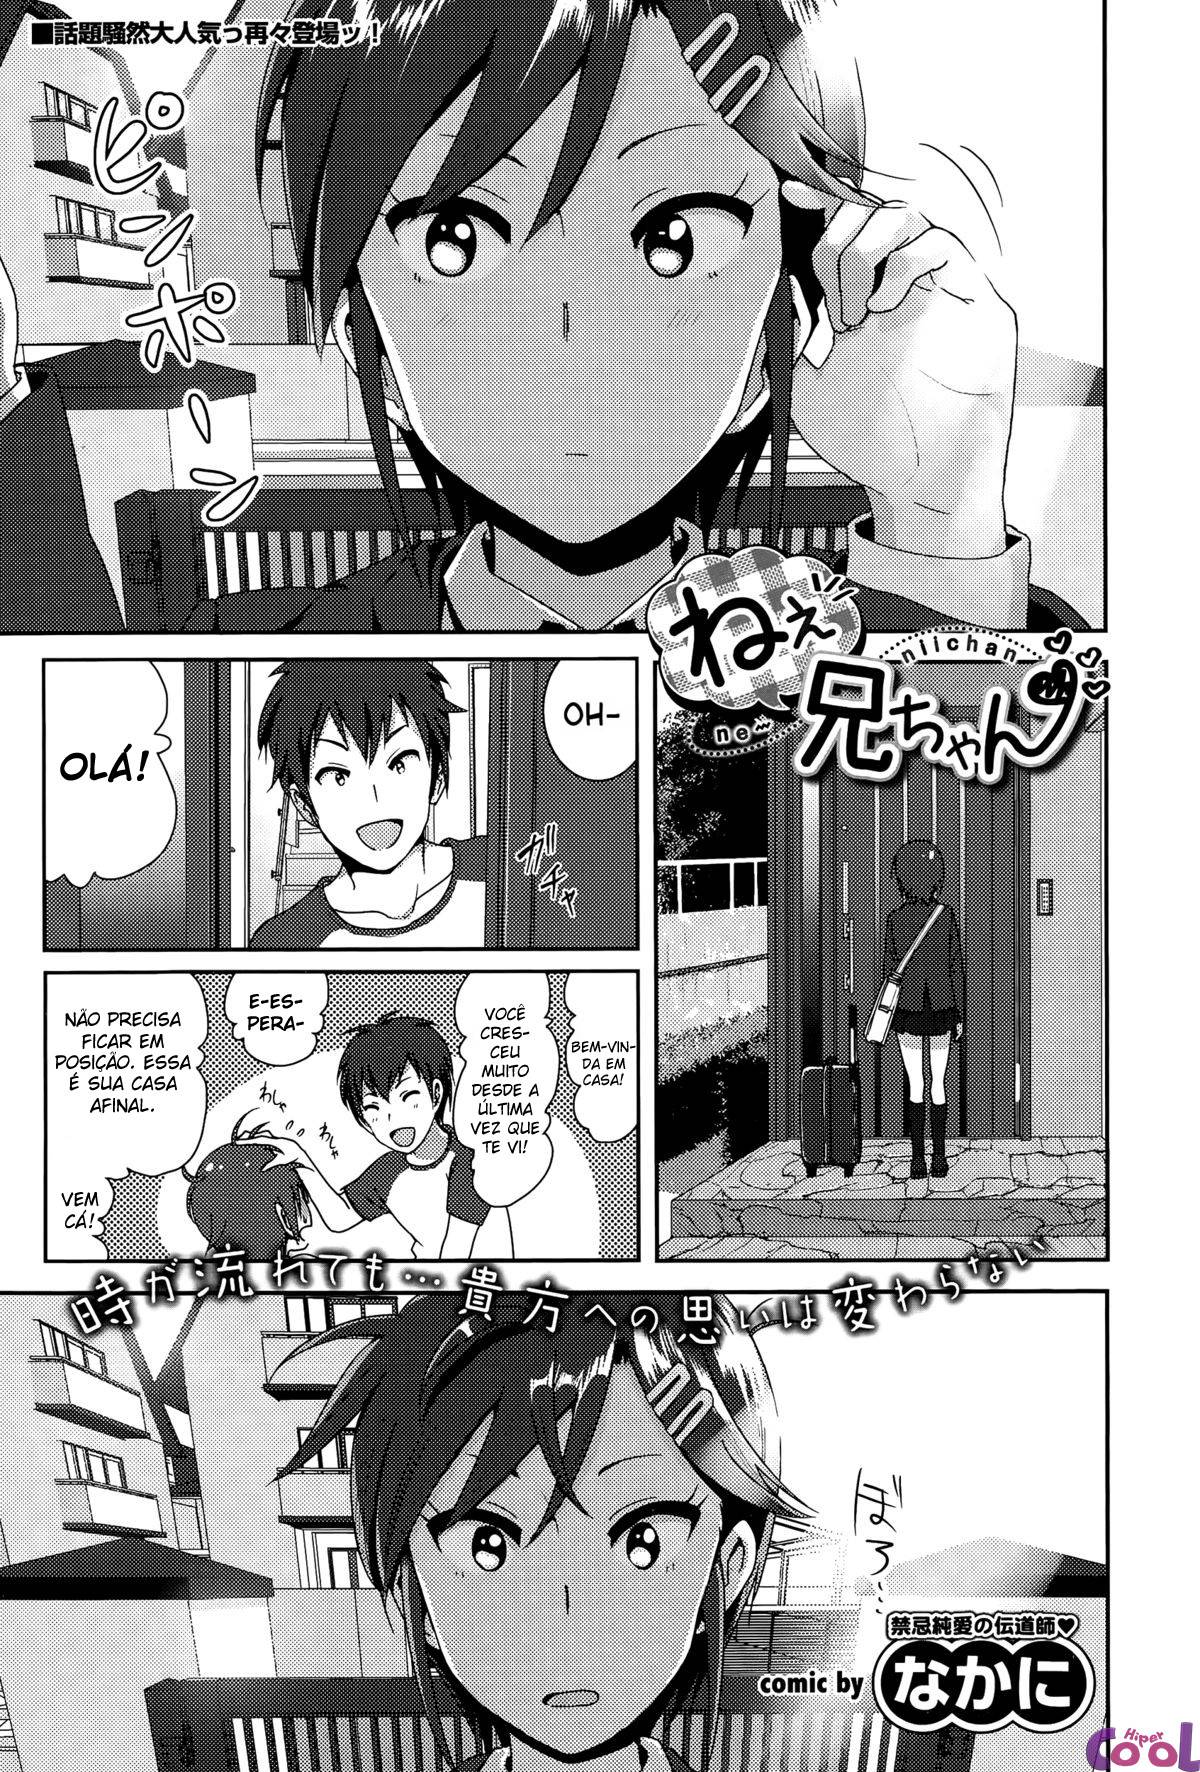 ne_-niichan-chapter-01-page-01.jpg